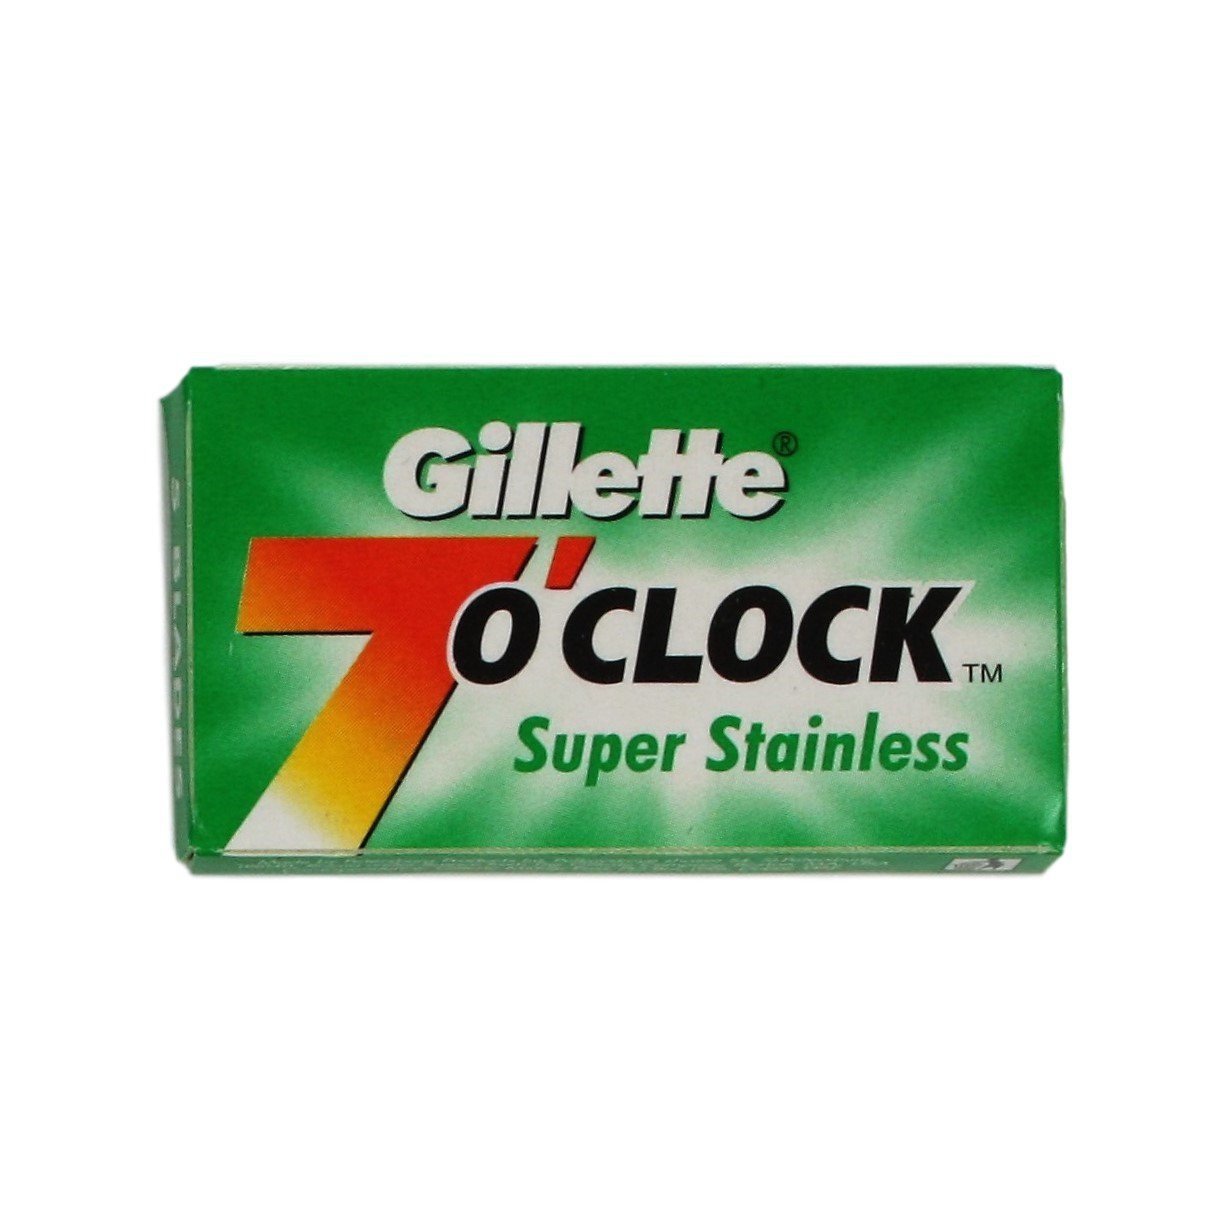 Gillette 7 O'clock Super Stainless Green Safety Razor Blades